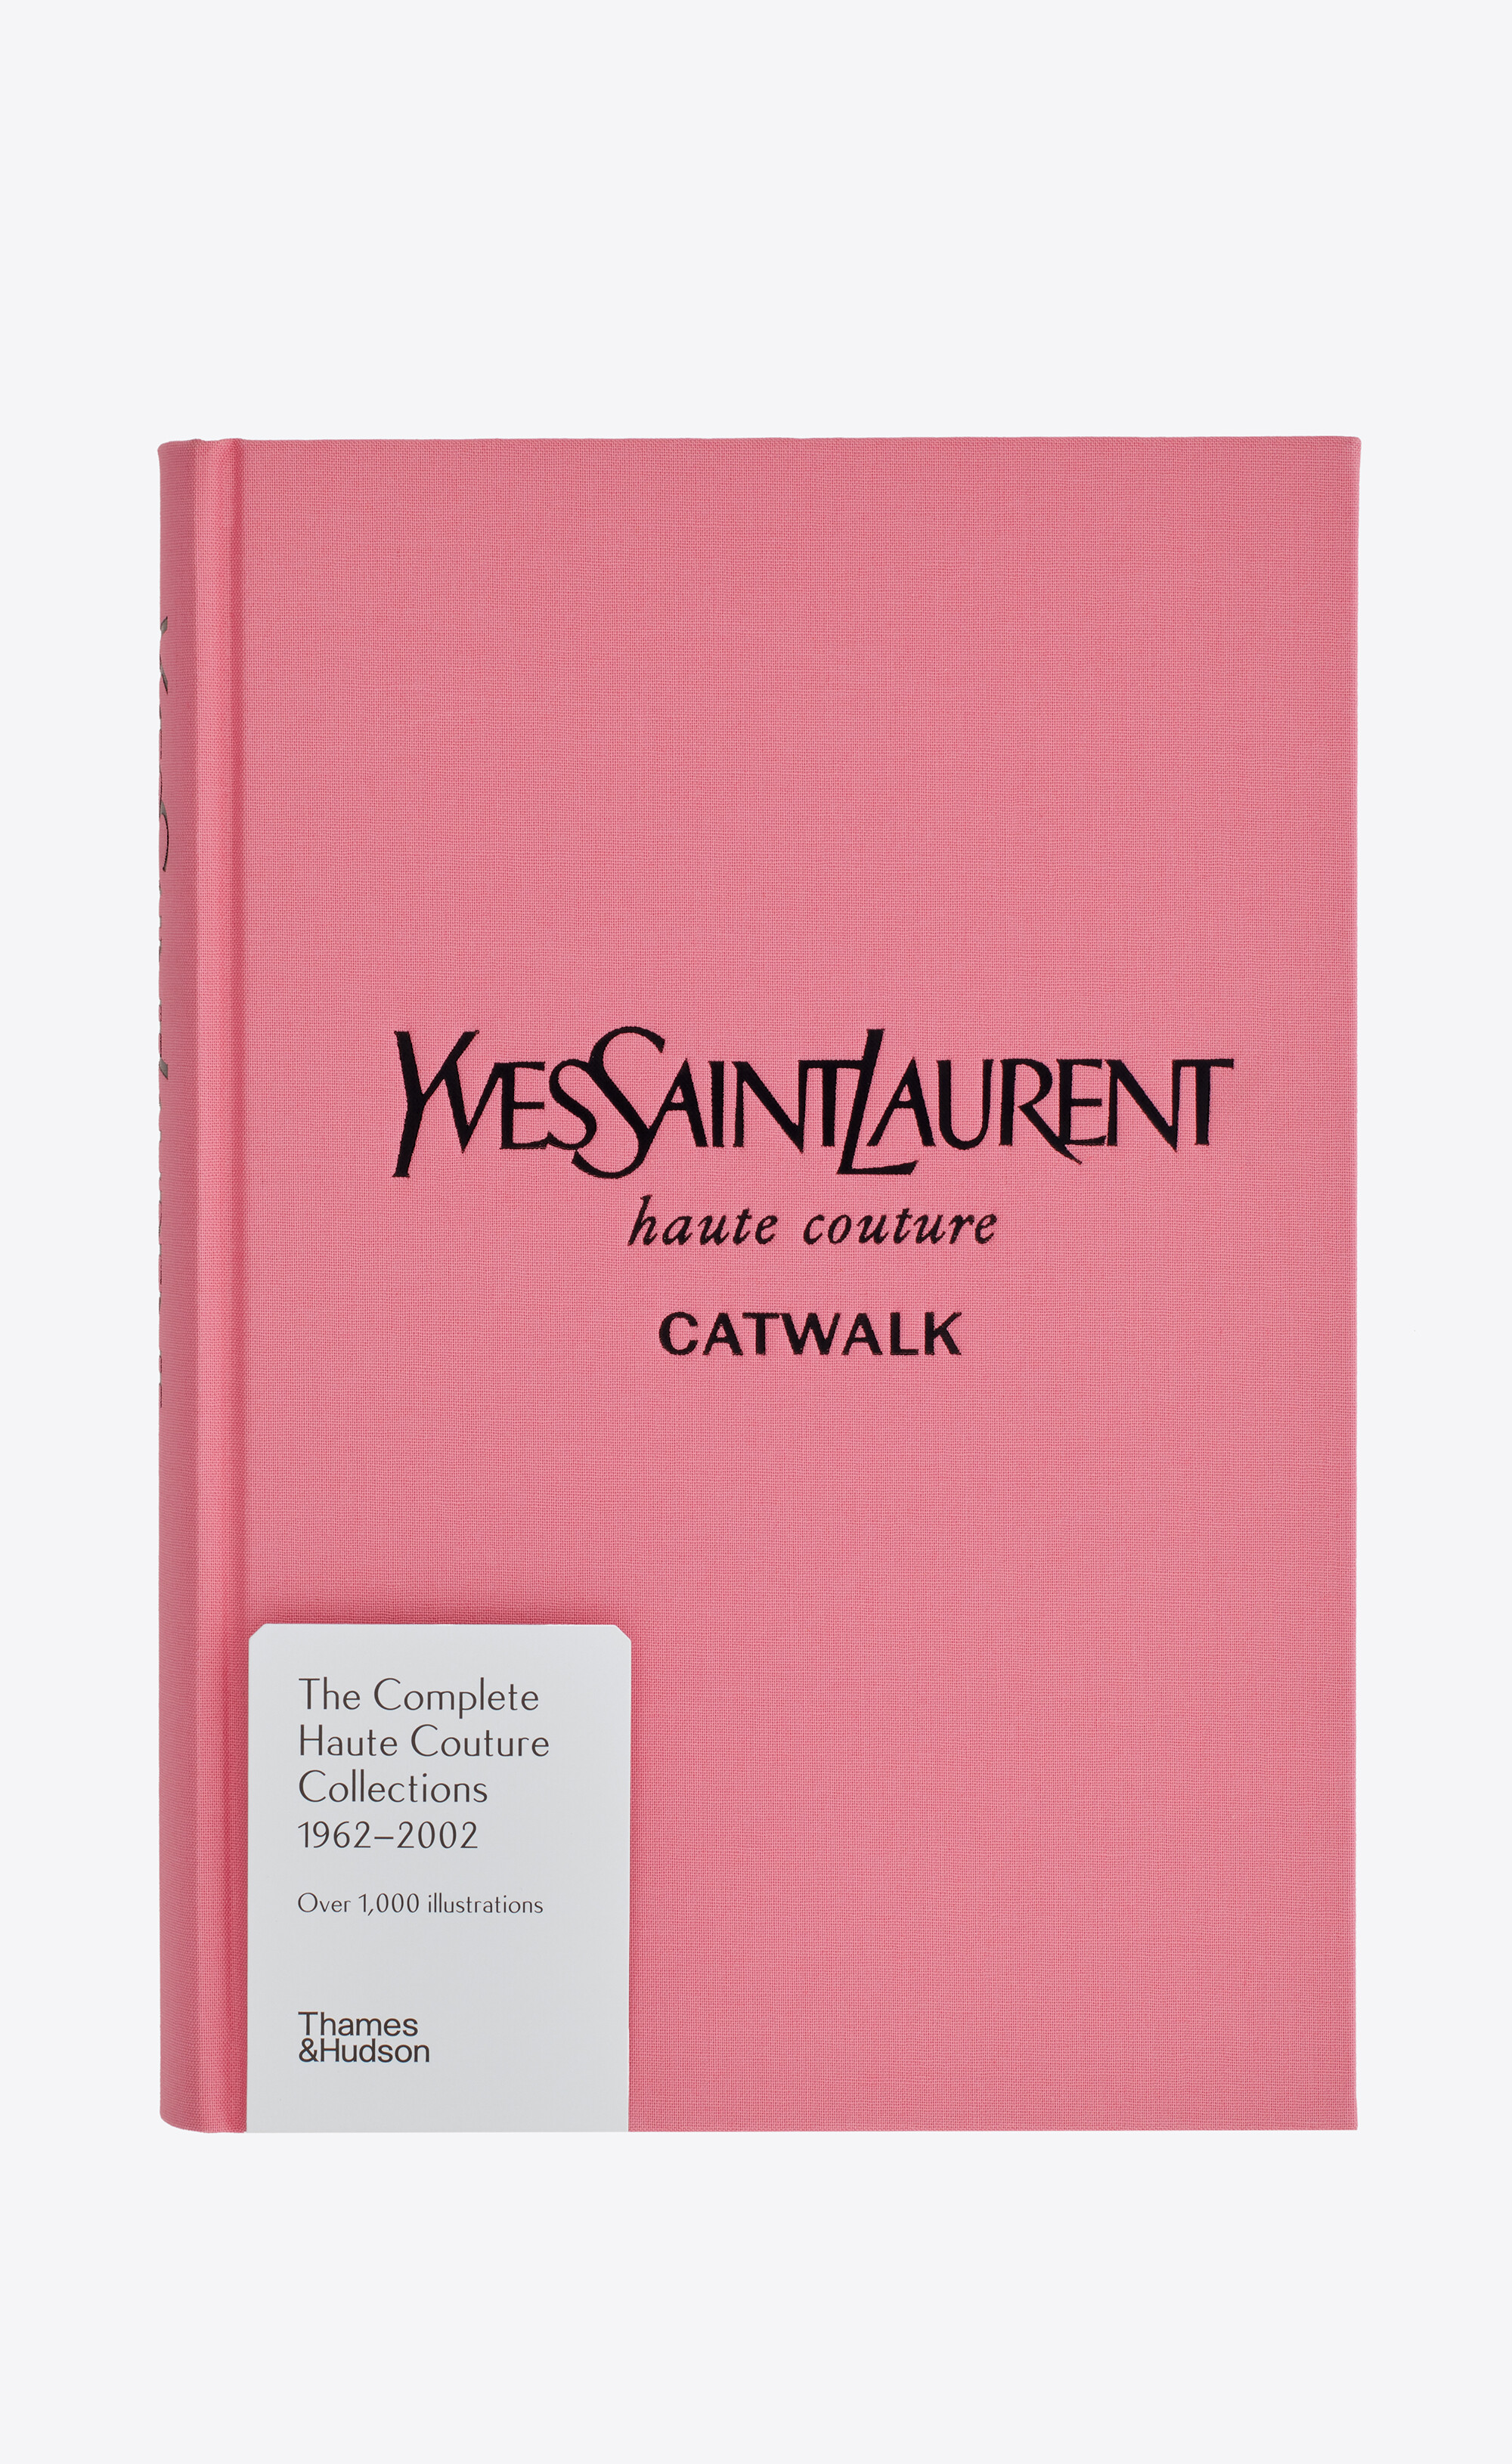 Yves Saint Laurent Catwalk (Catwalk)